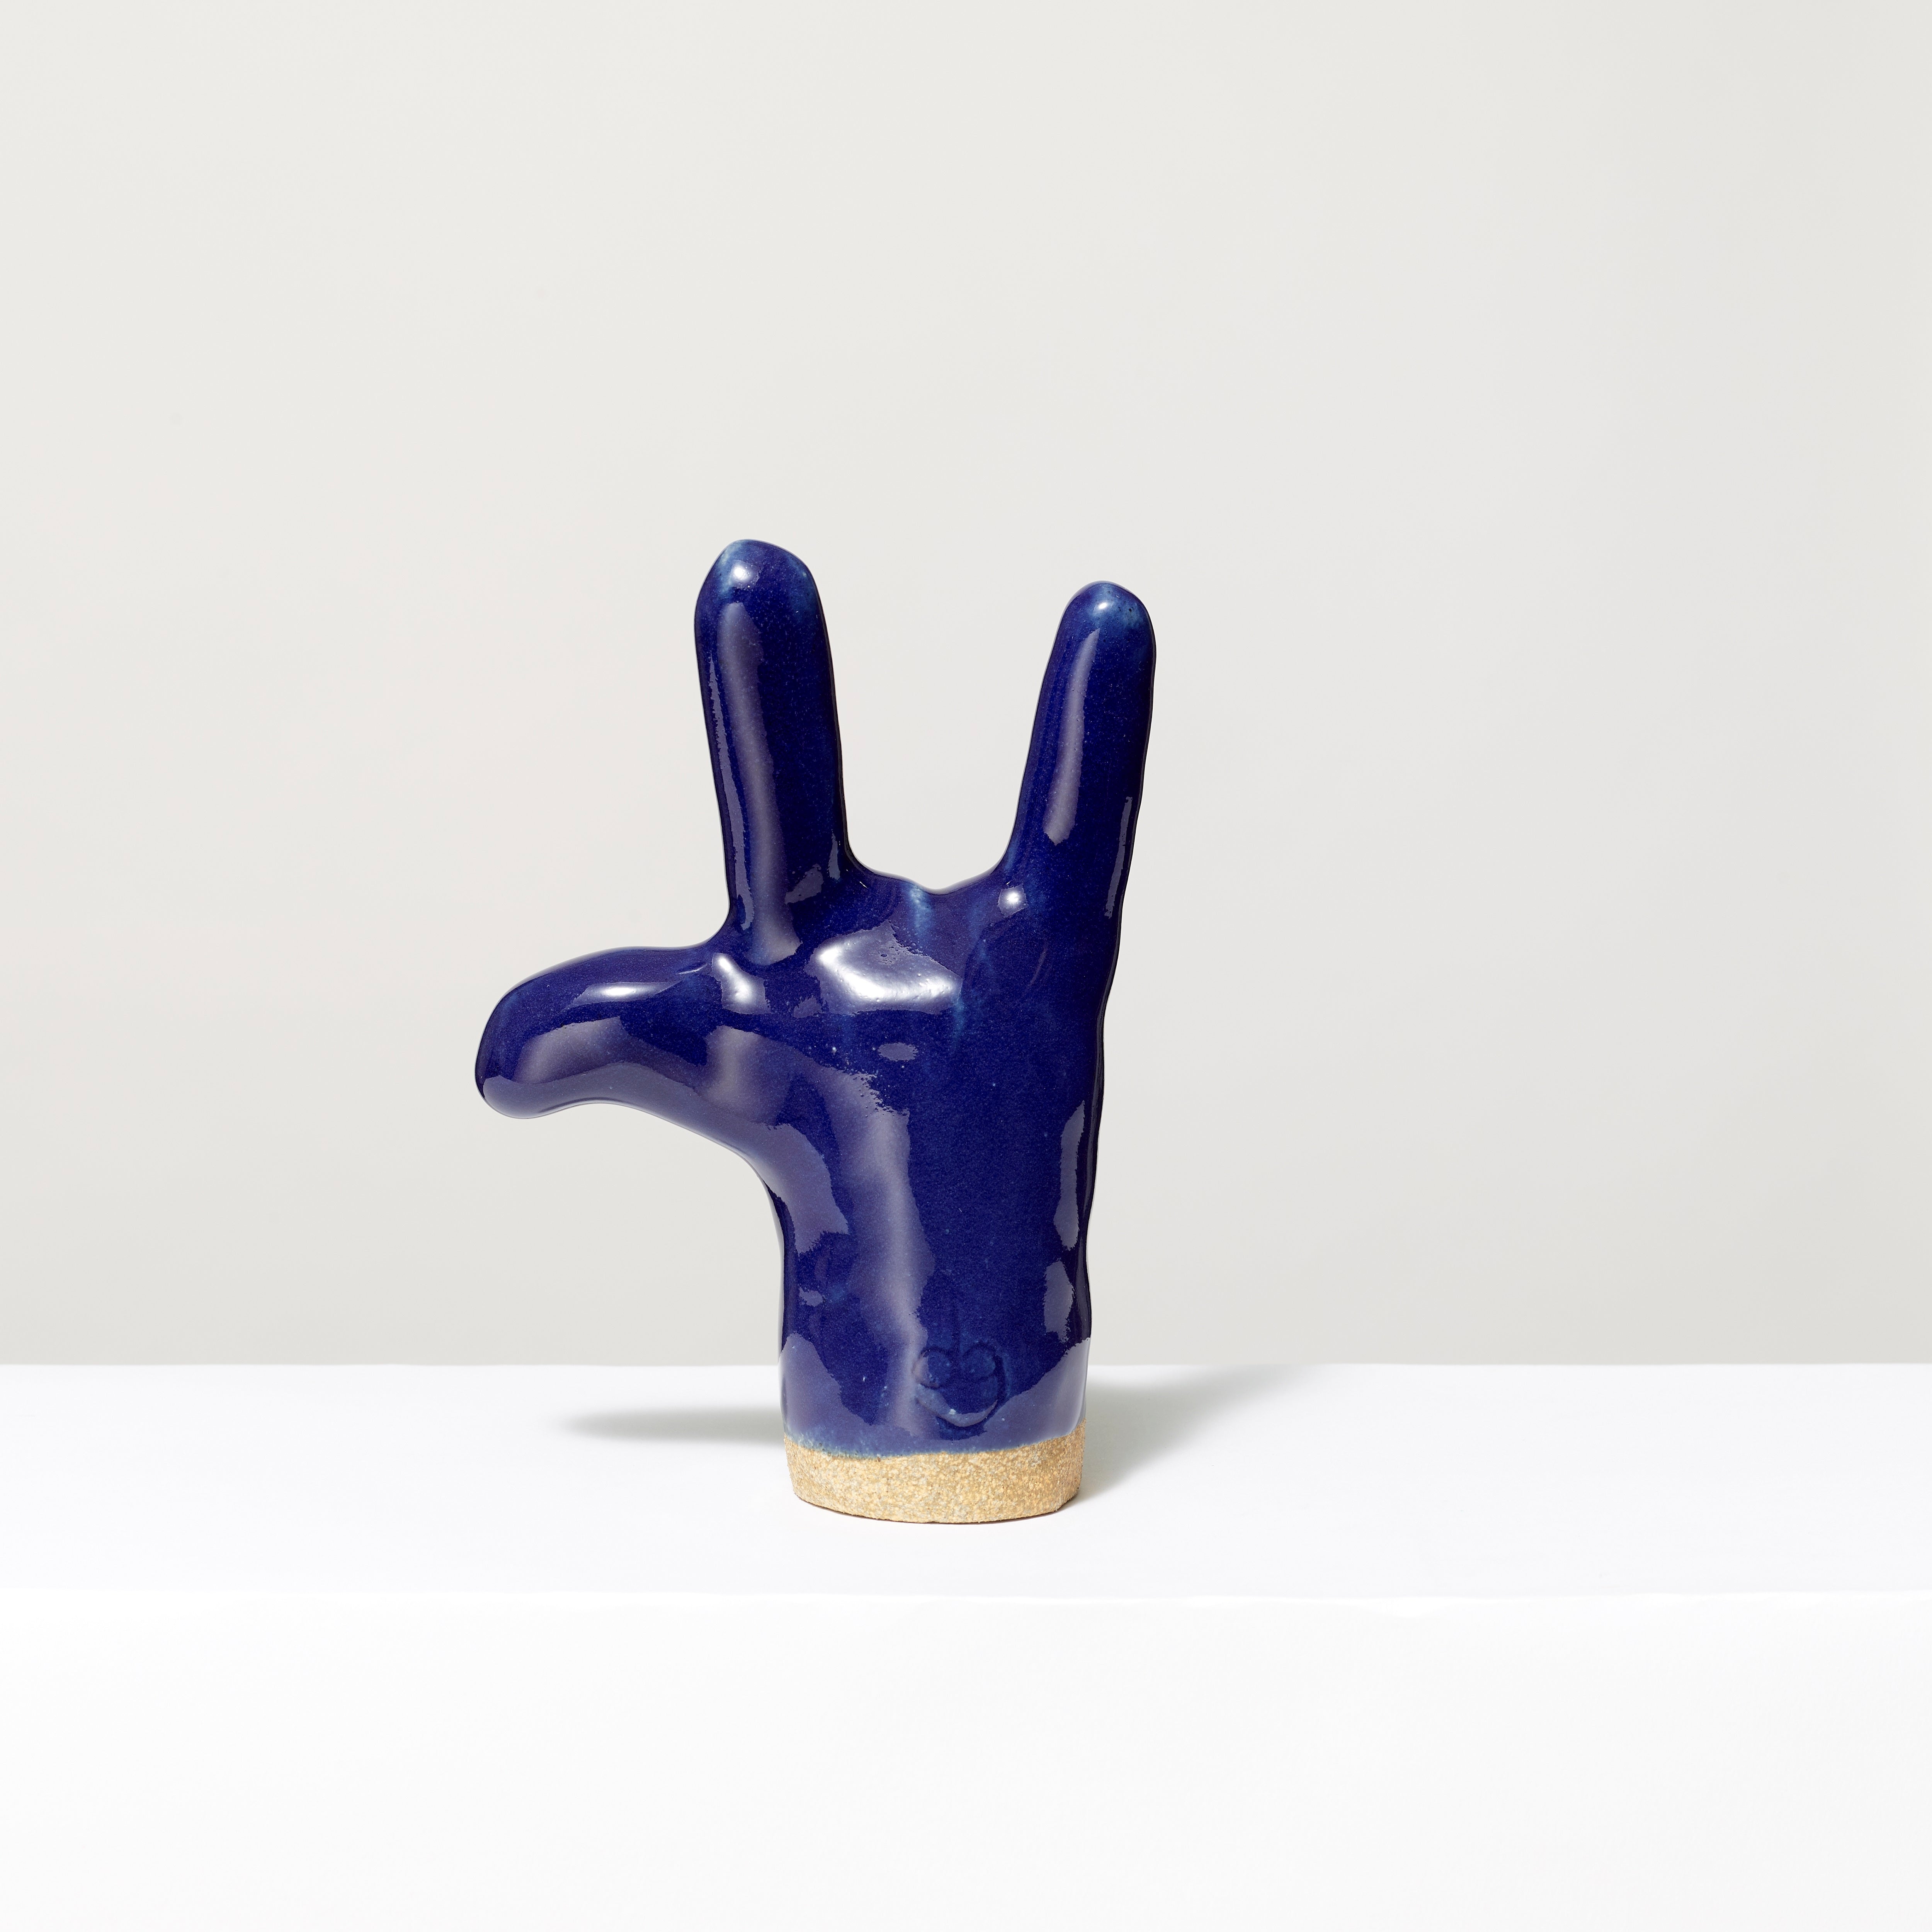 100% Ceramic love sign hand sculpture. Measures 7" x 5" x 3". 